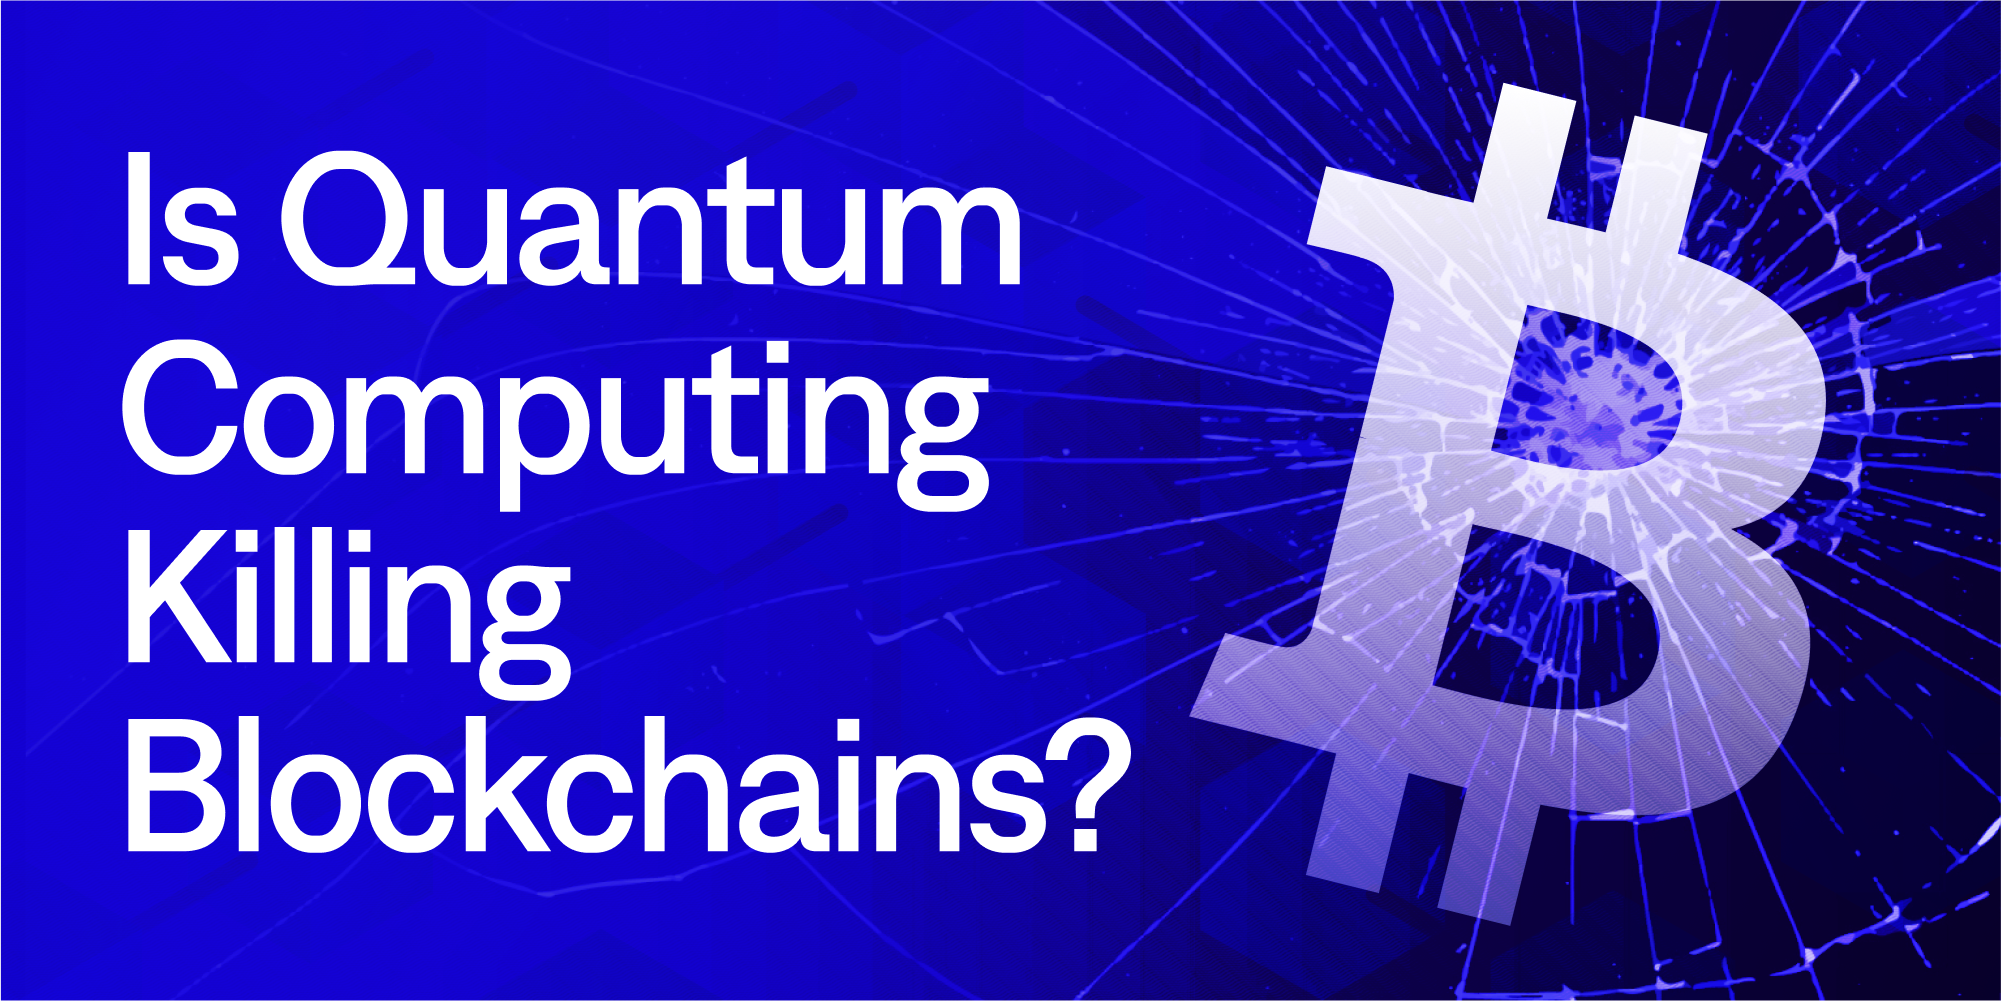 Is Quantum Computing Killing Blockchains?